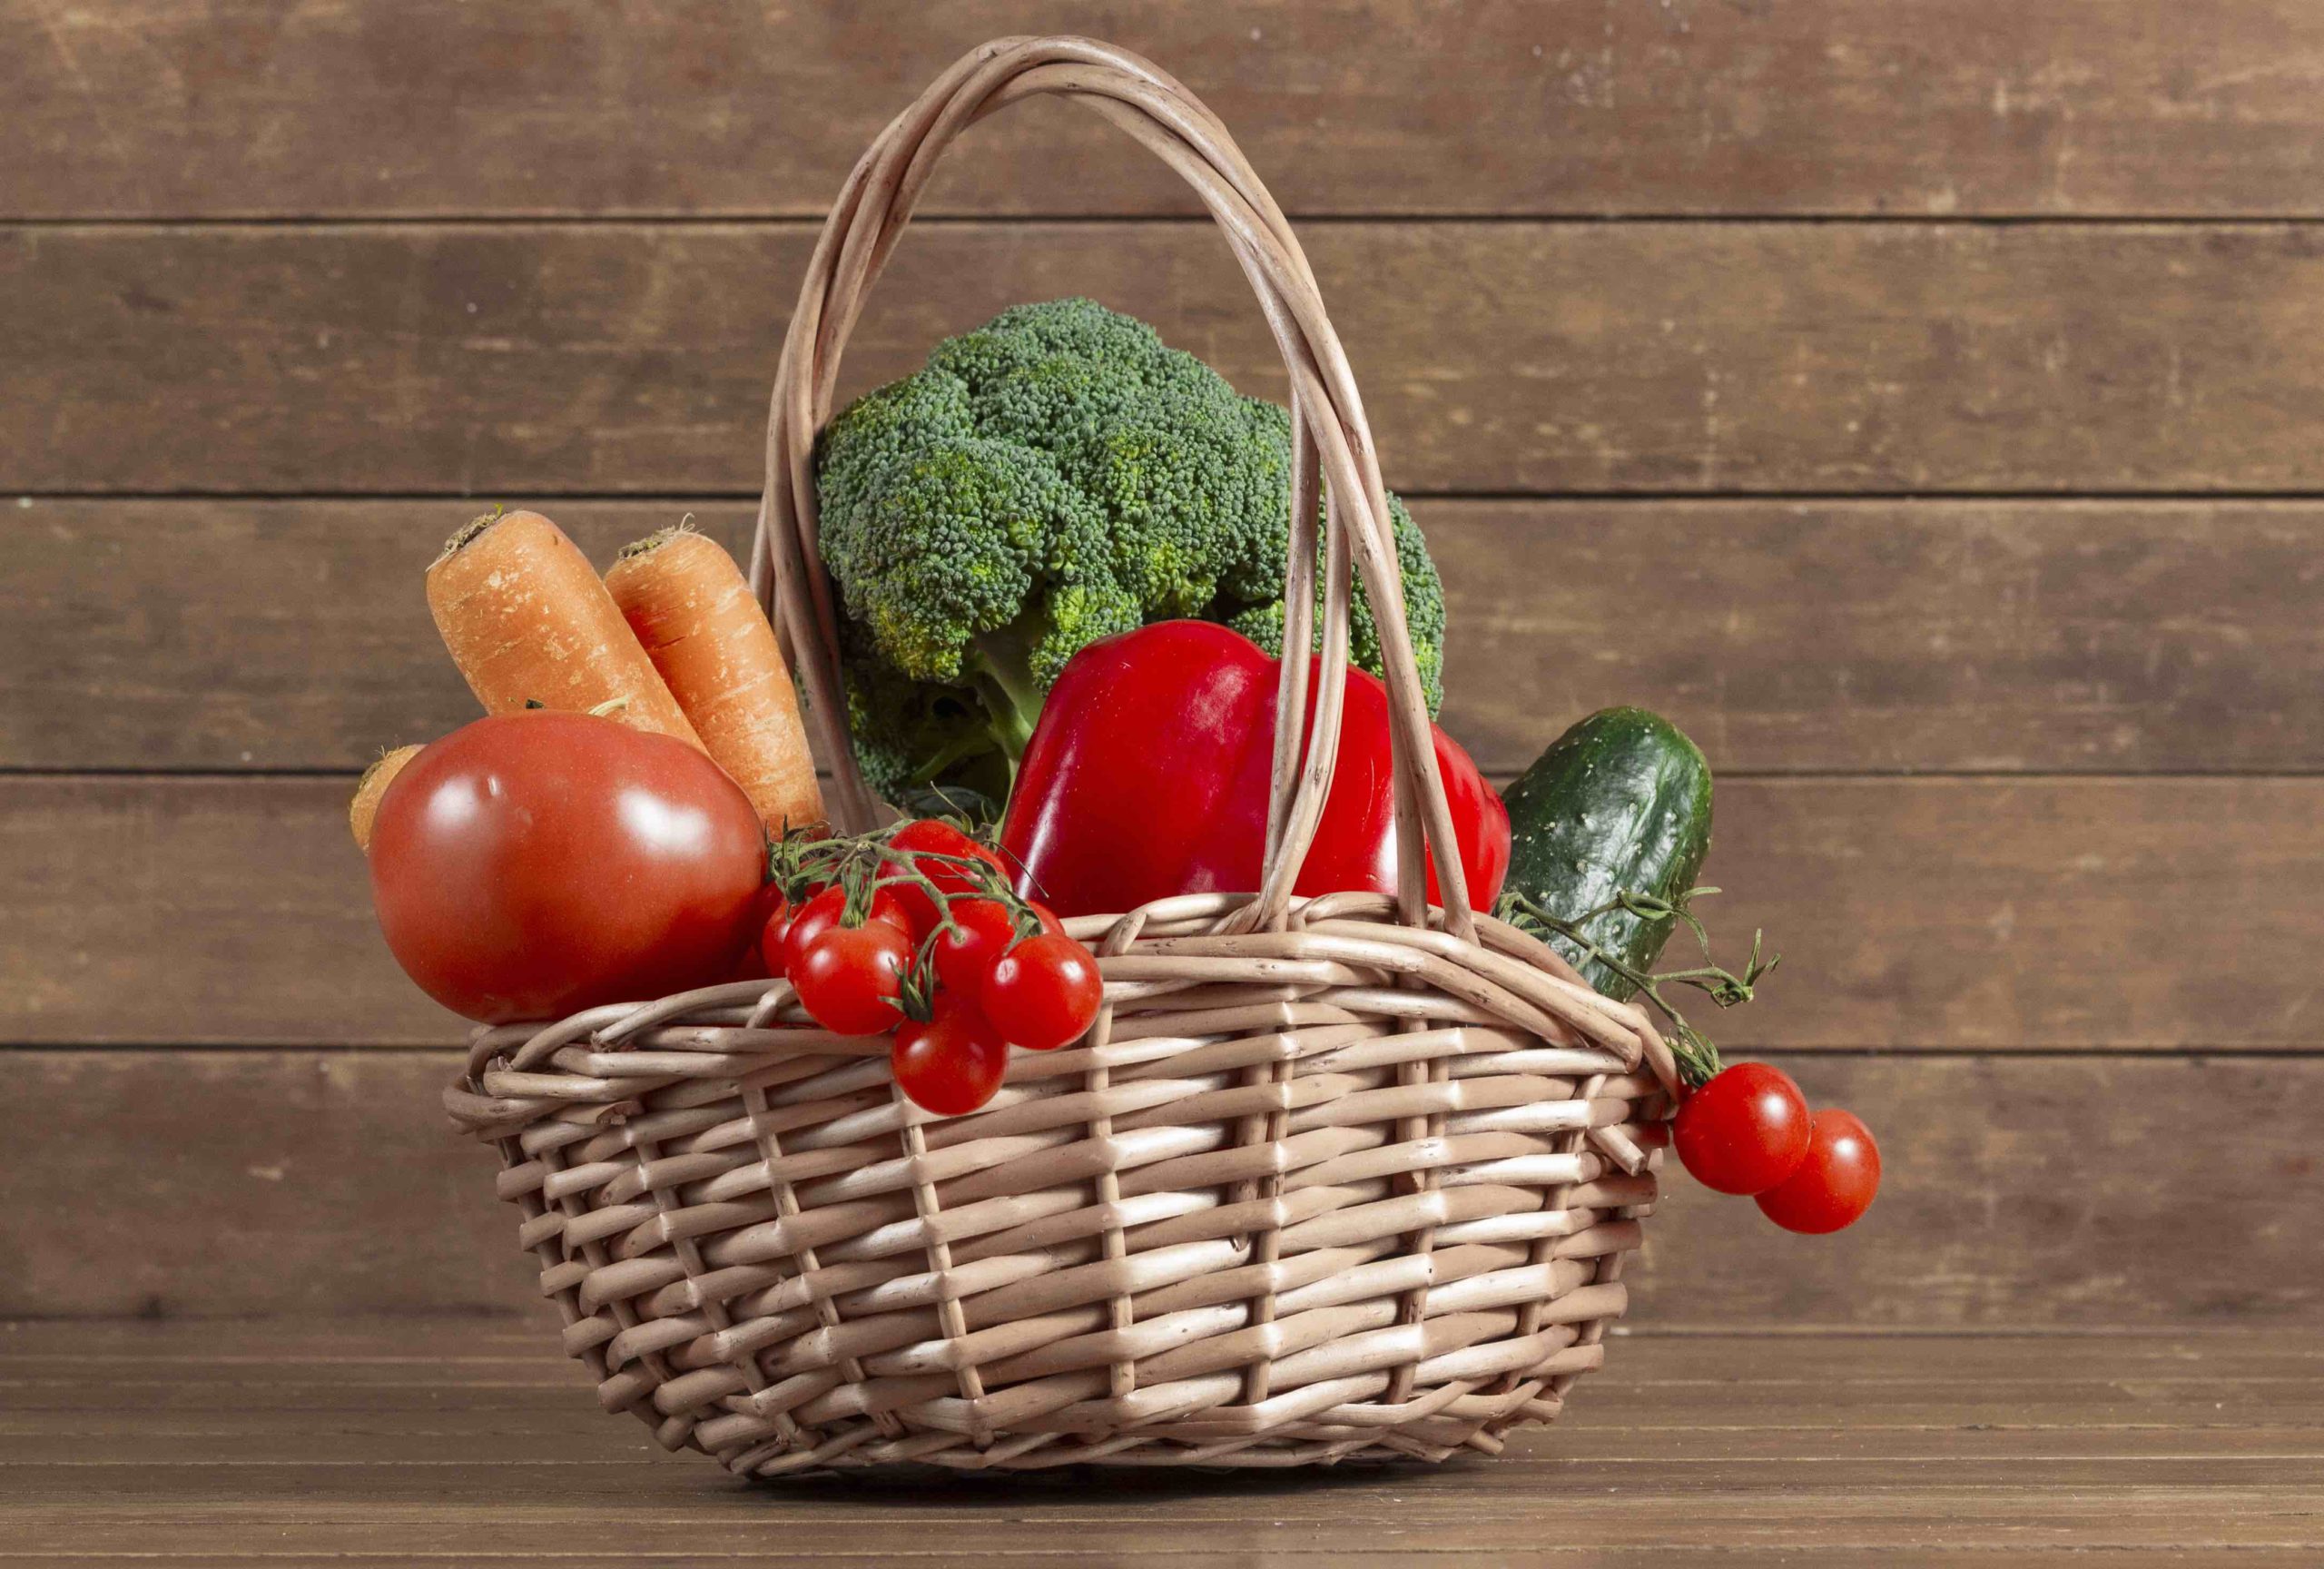 5 secretos para conservar frutas y verduras frescas